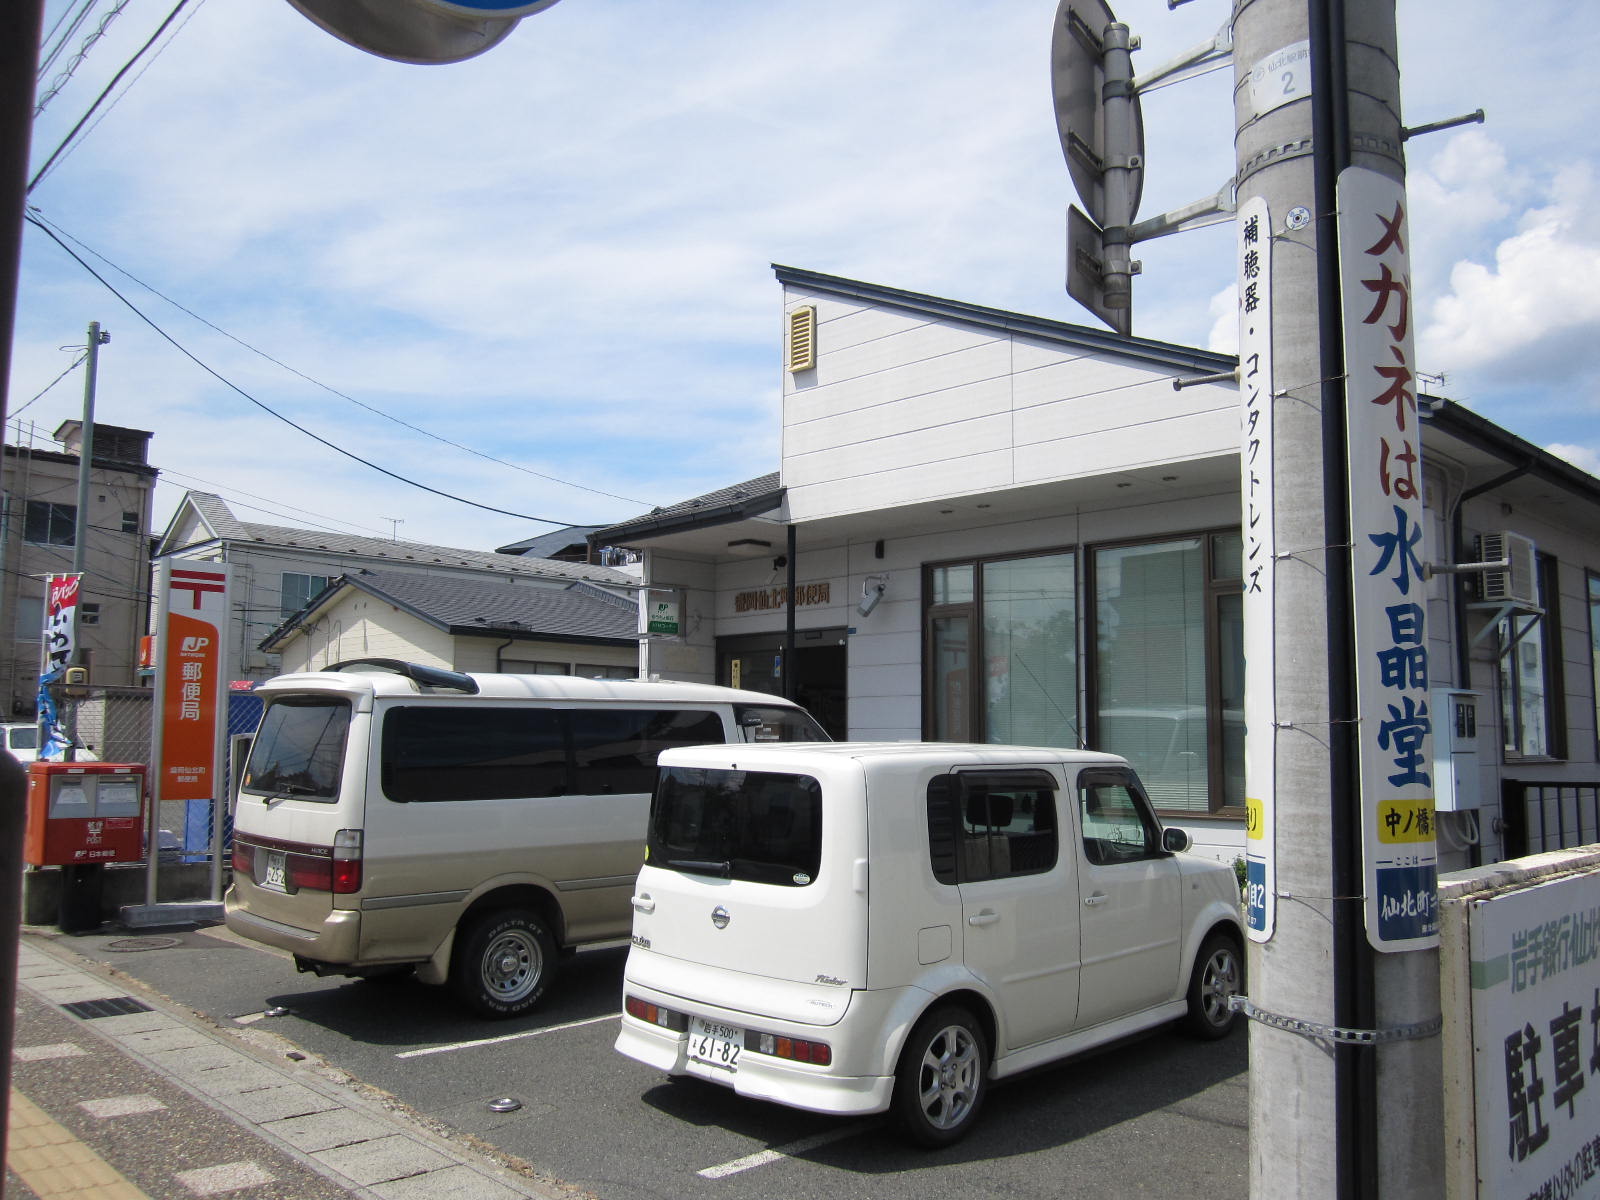 post office. 1211m to Morioka Senbokucho post office (post office)